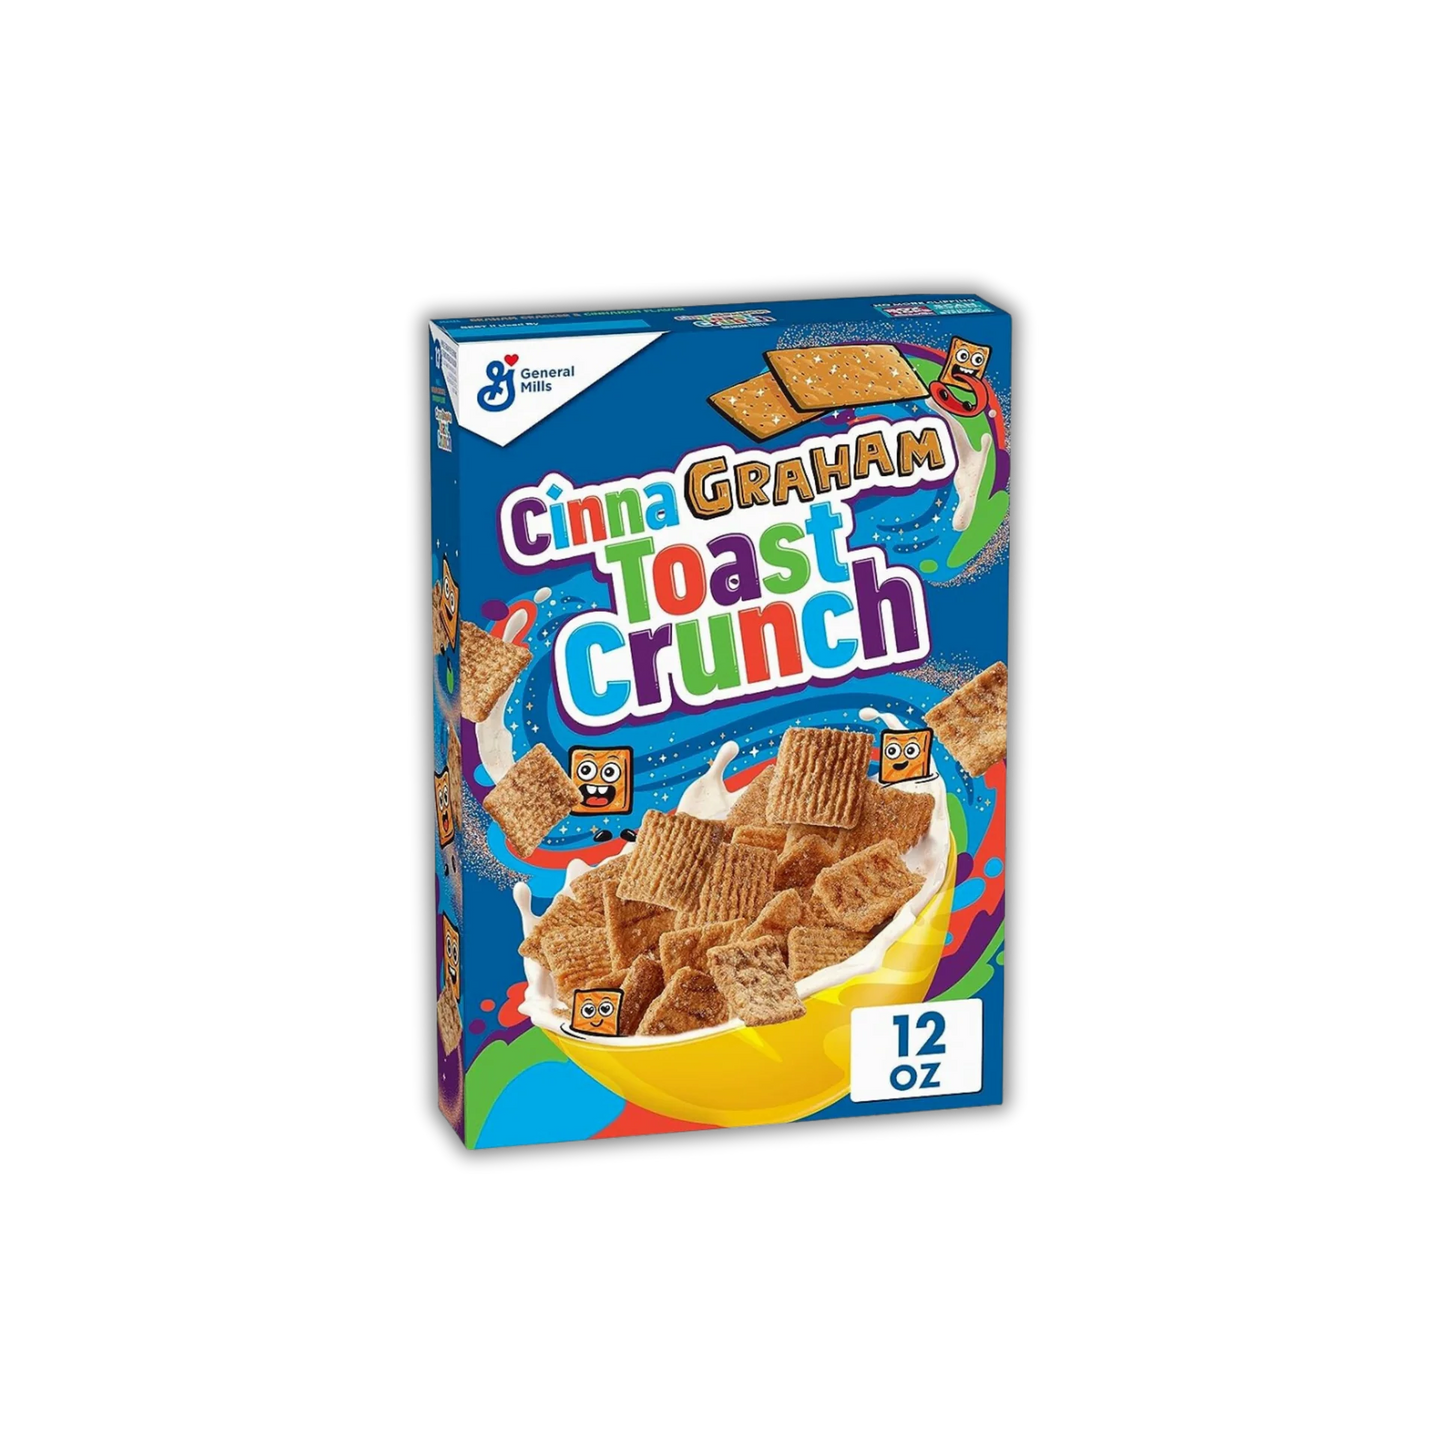 Cinna Graham Toast Crunch 12Oz